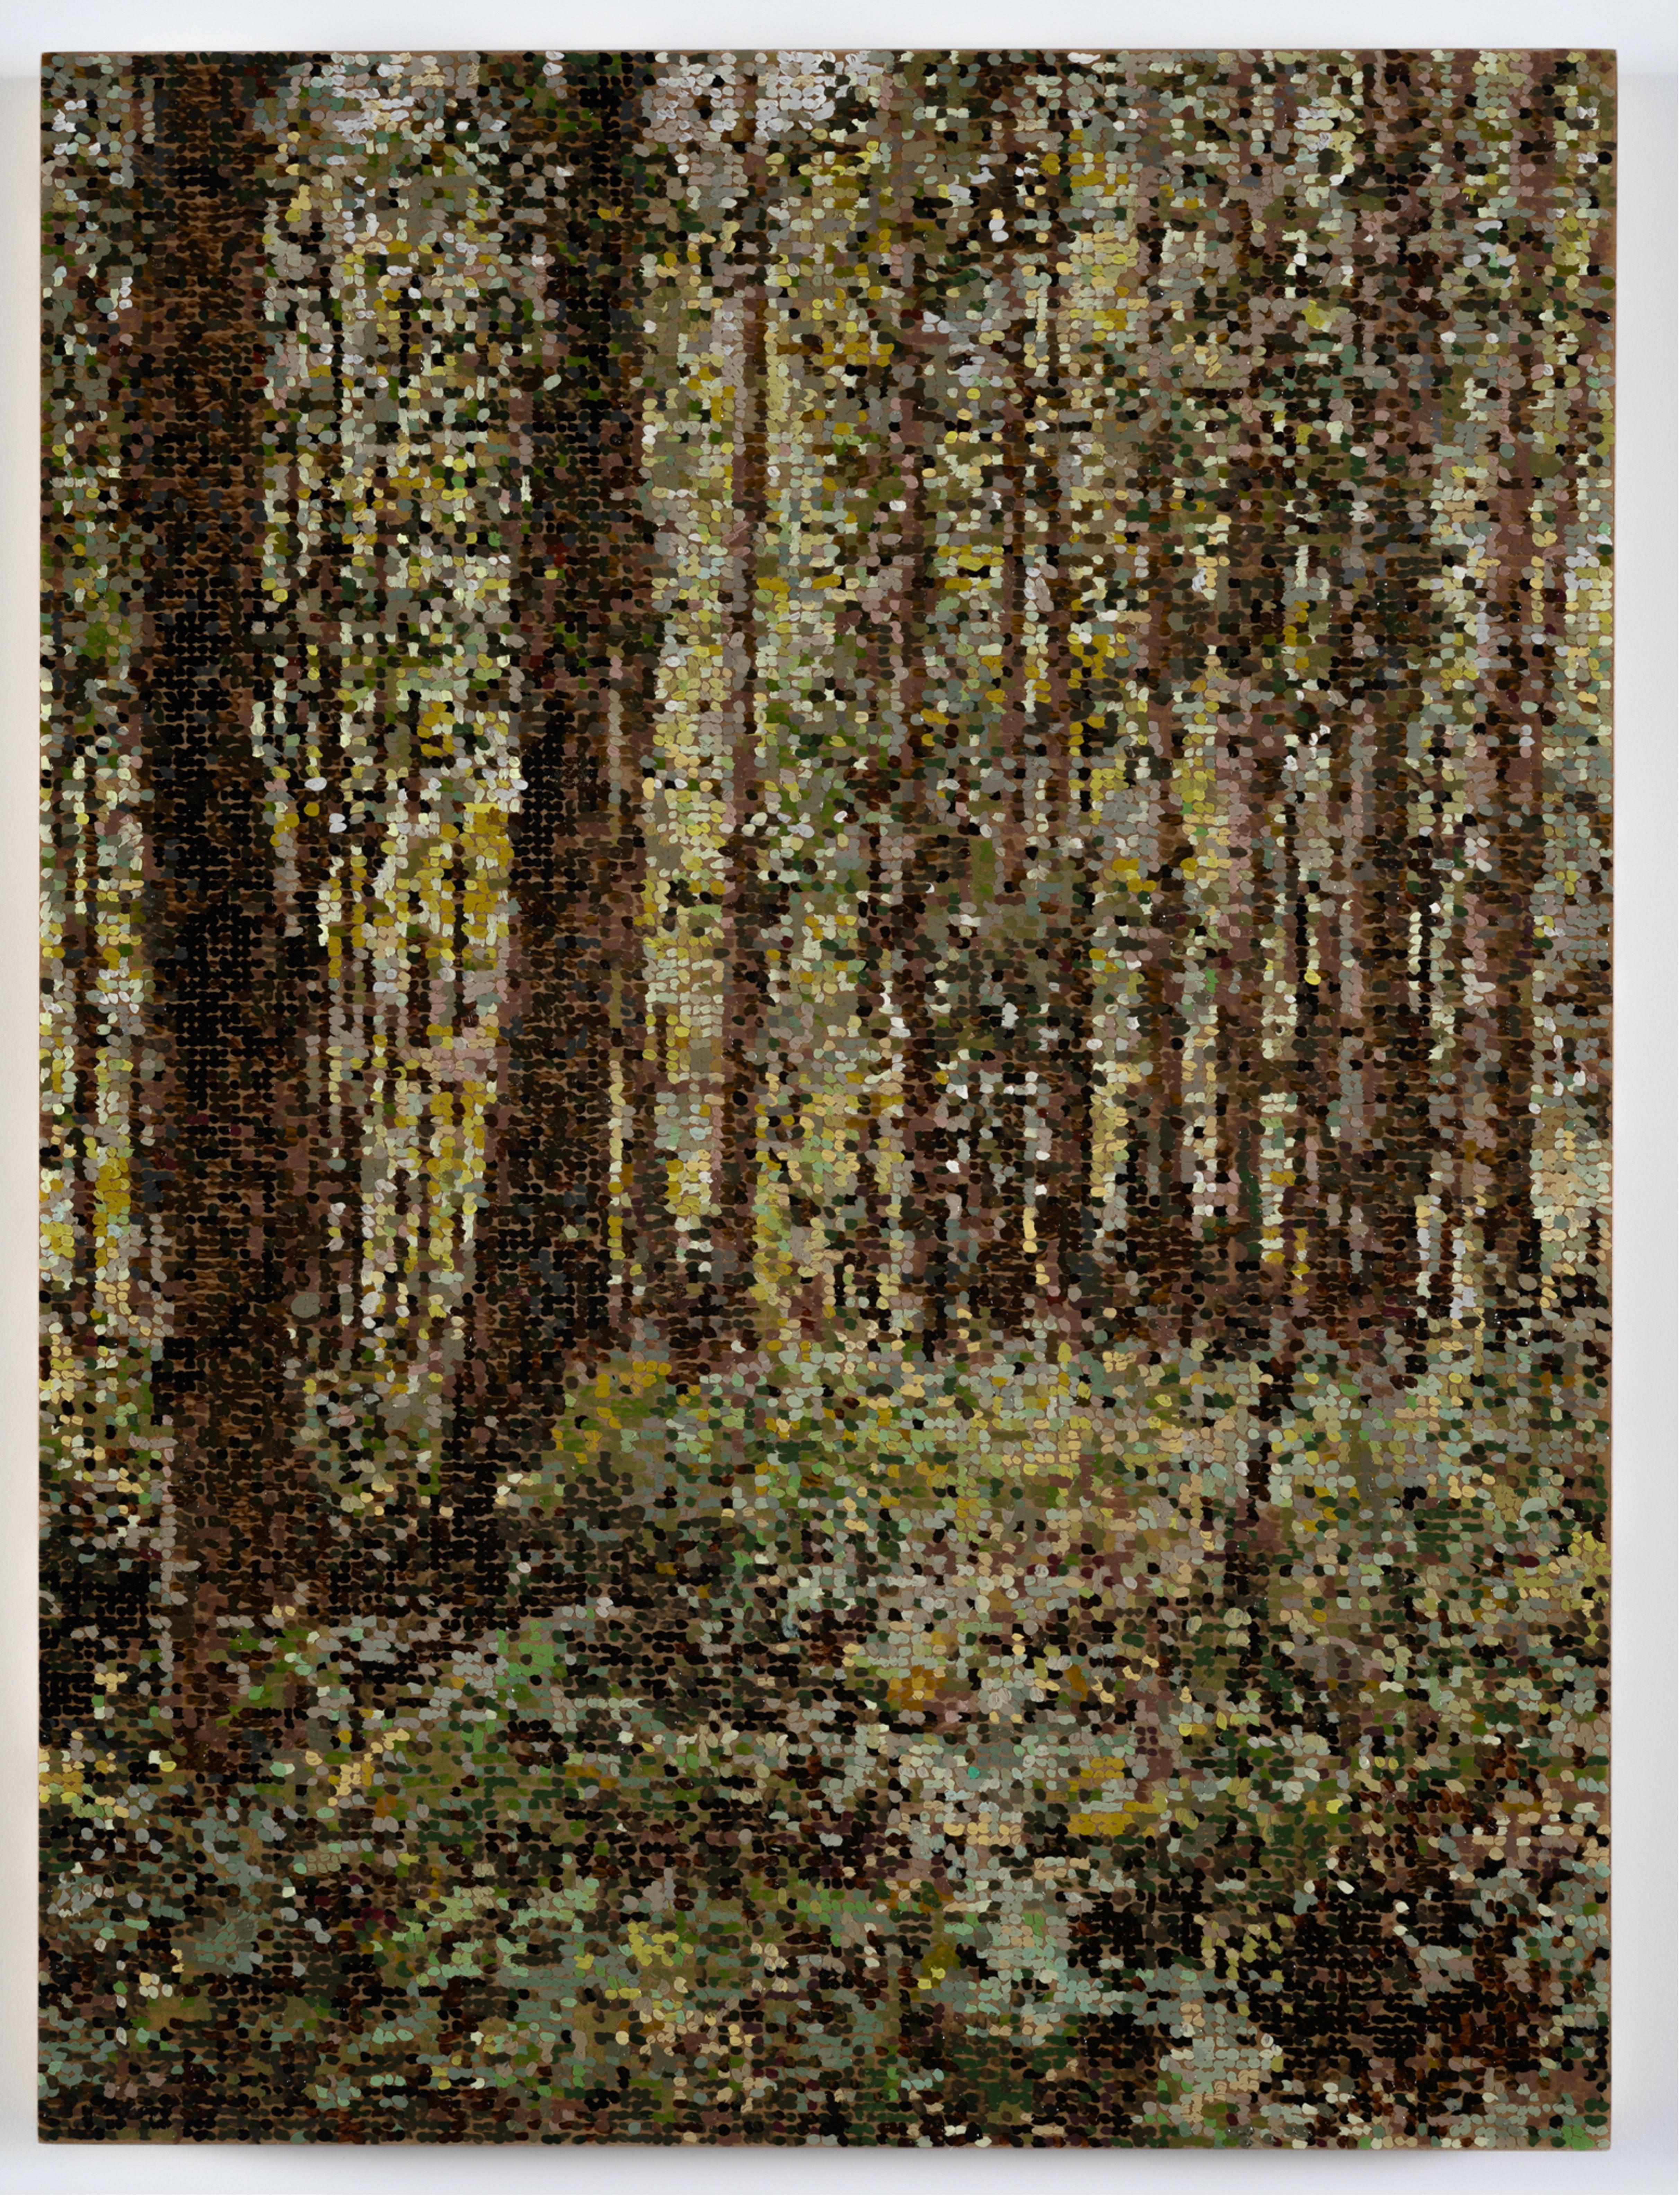 Landscape Painting Kirstin Lamb - Forestappled Forest, paysage forestier pointilliste, feuilles vertes, arbres bruns, bois